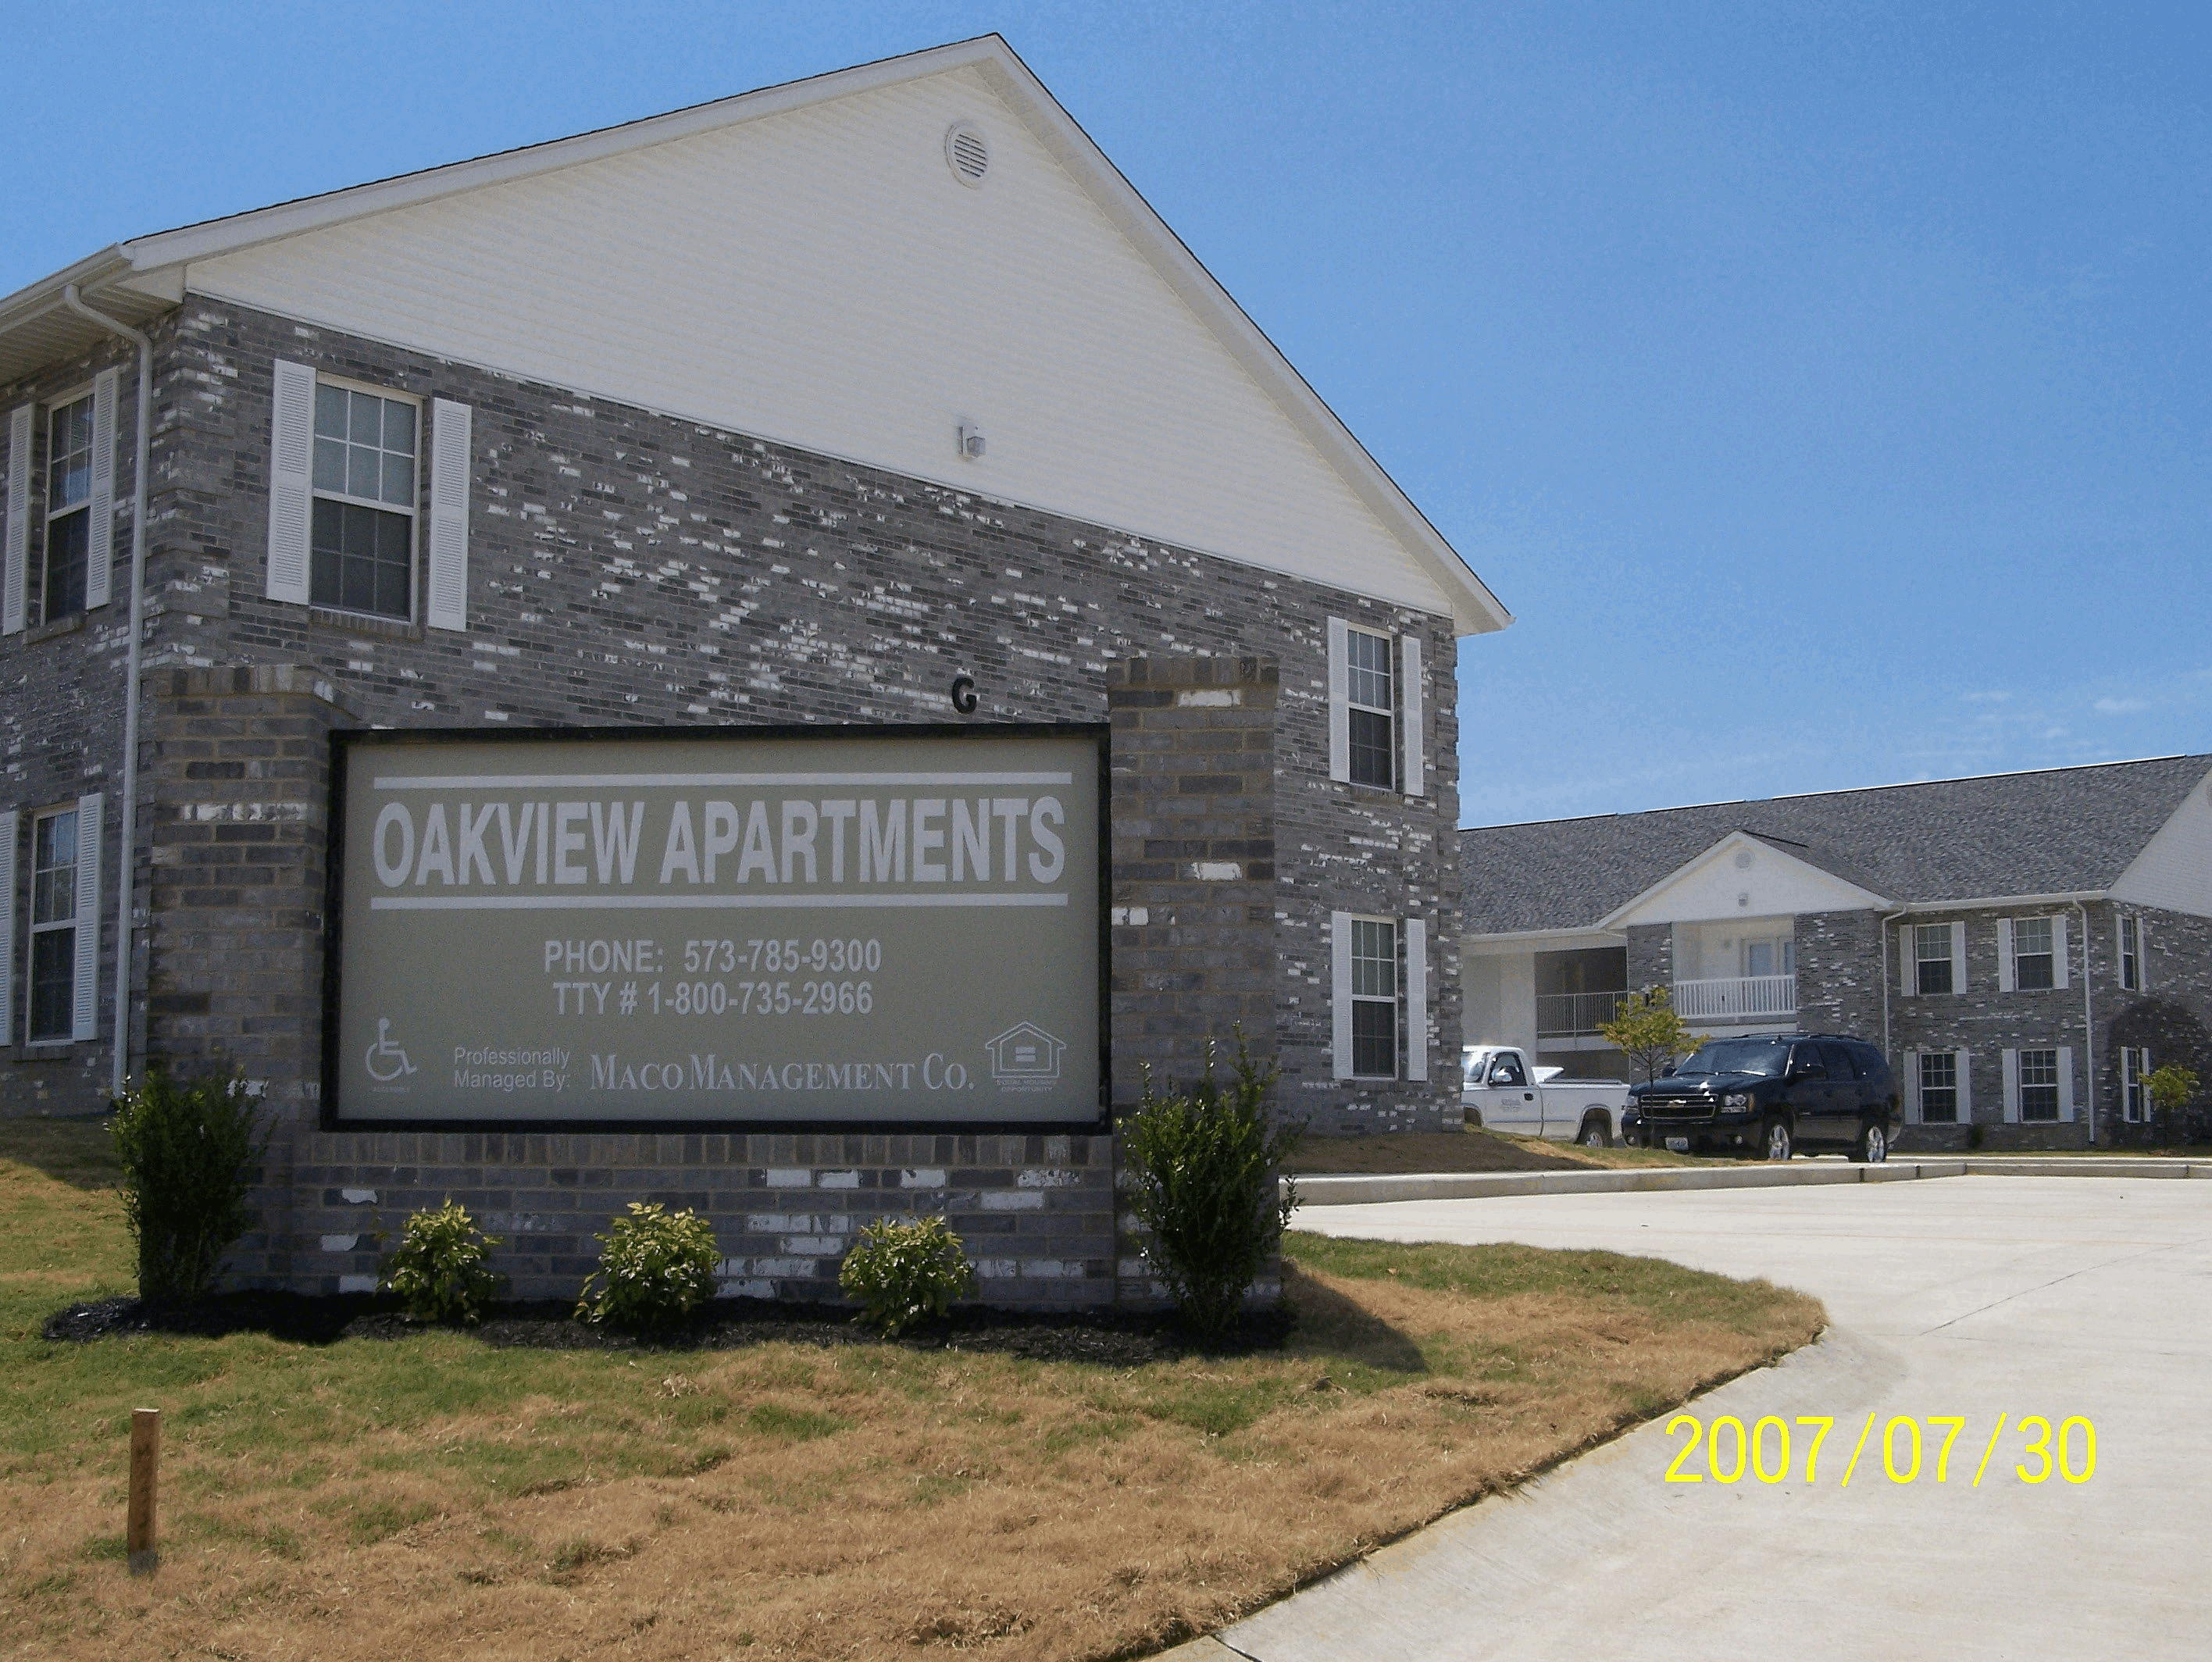 Oakview Apartments II